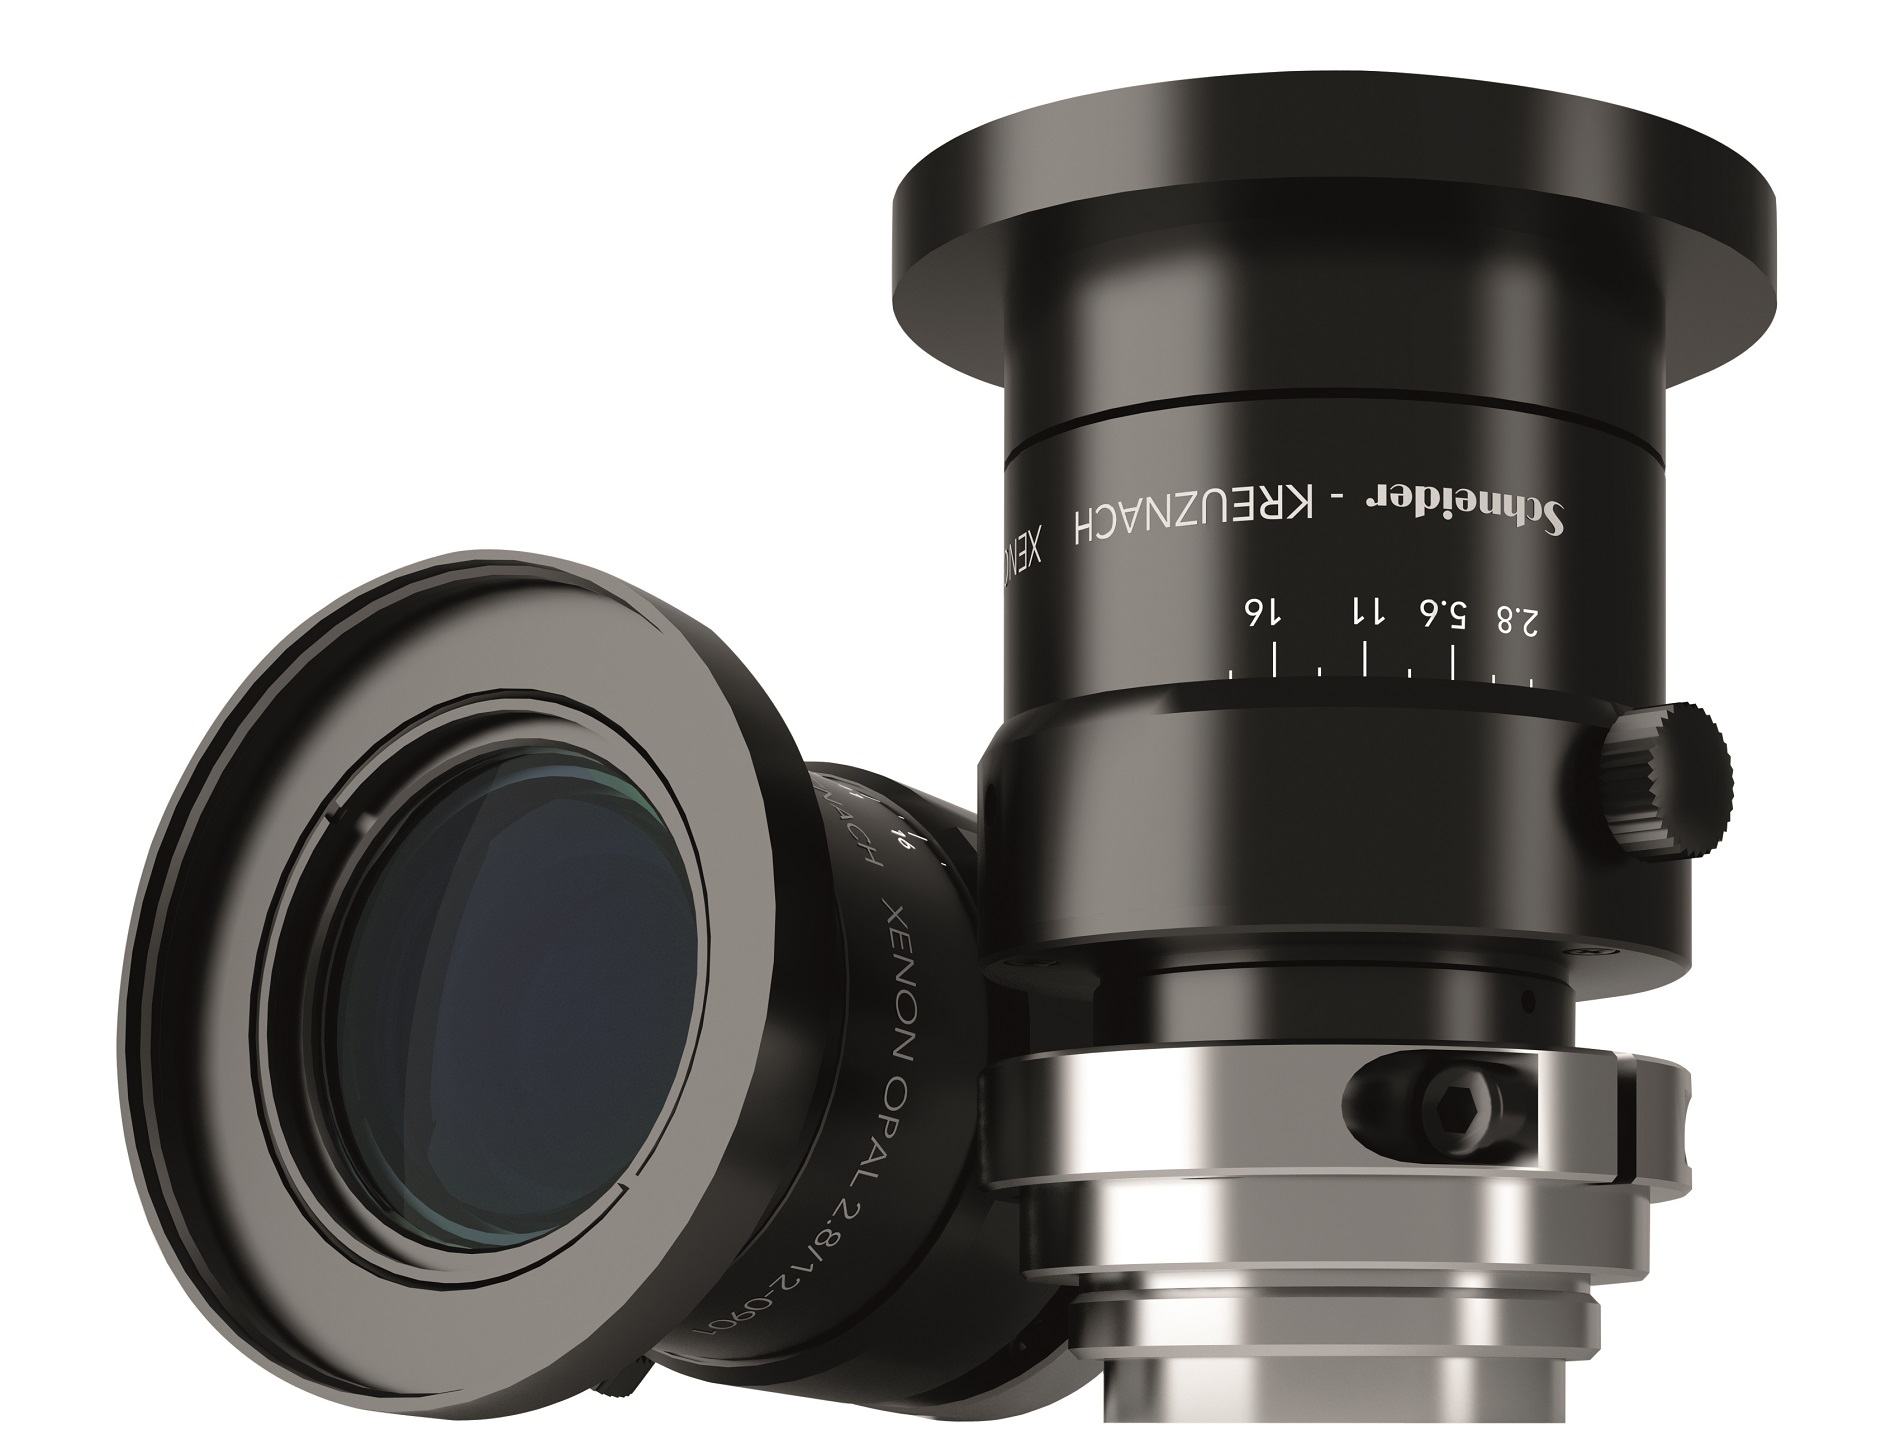 The new Xenon-Opal 2.8/12 lens